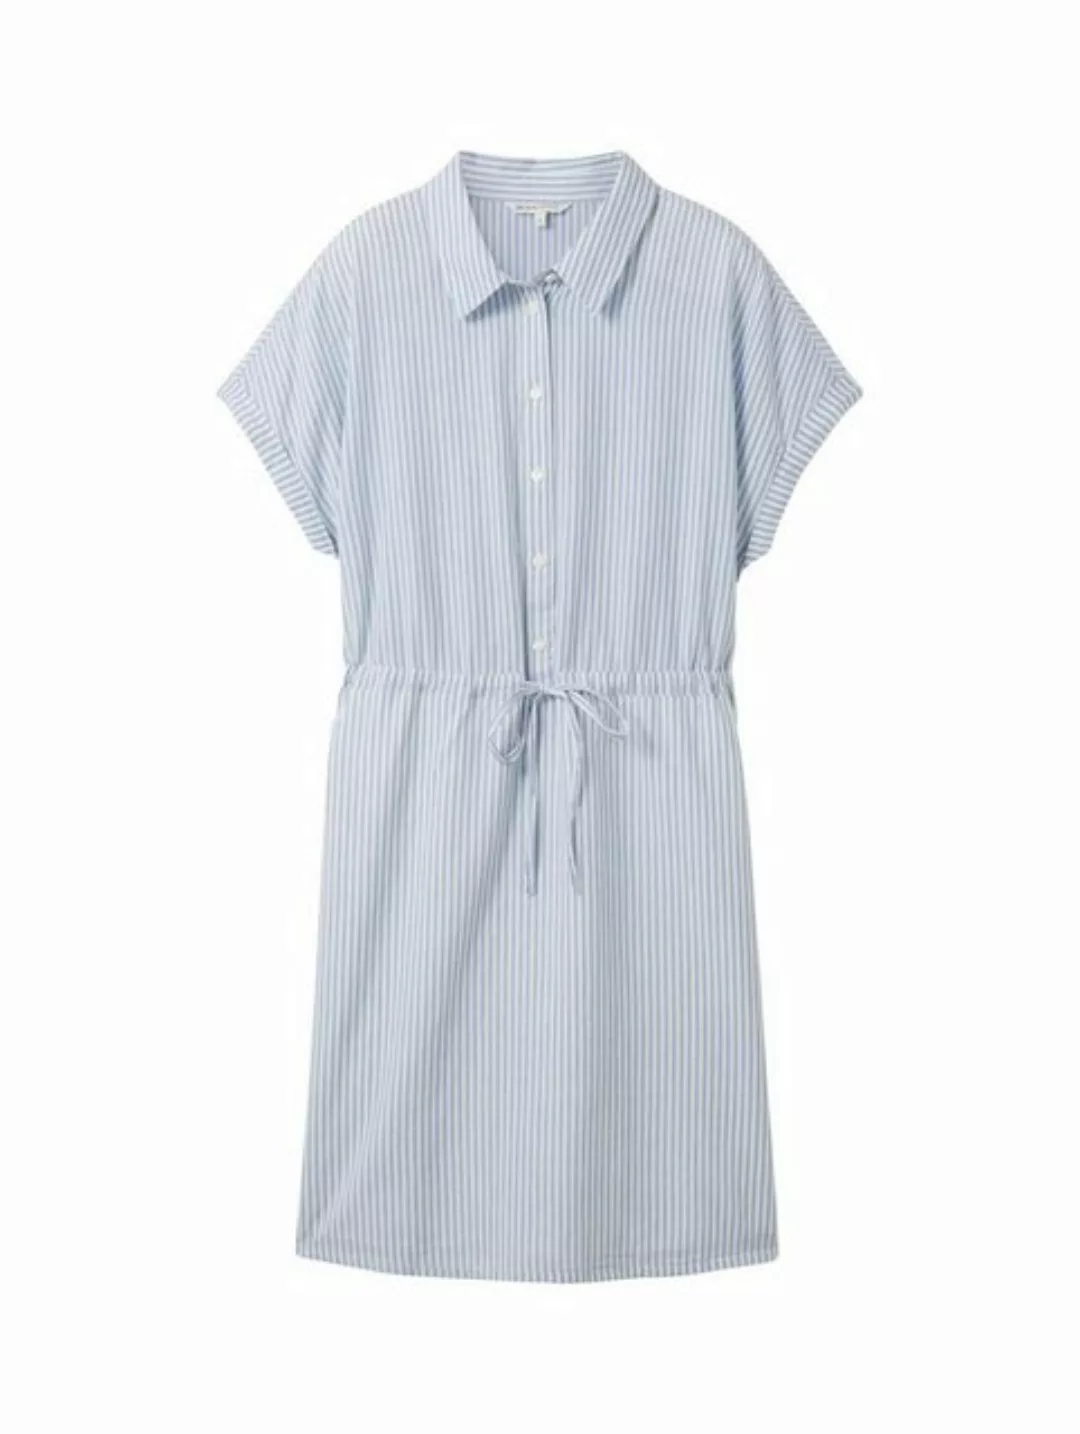 TOM TAILOR Denim Sommerkleid striped mini dress, blue white strripe günstig online kaufen